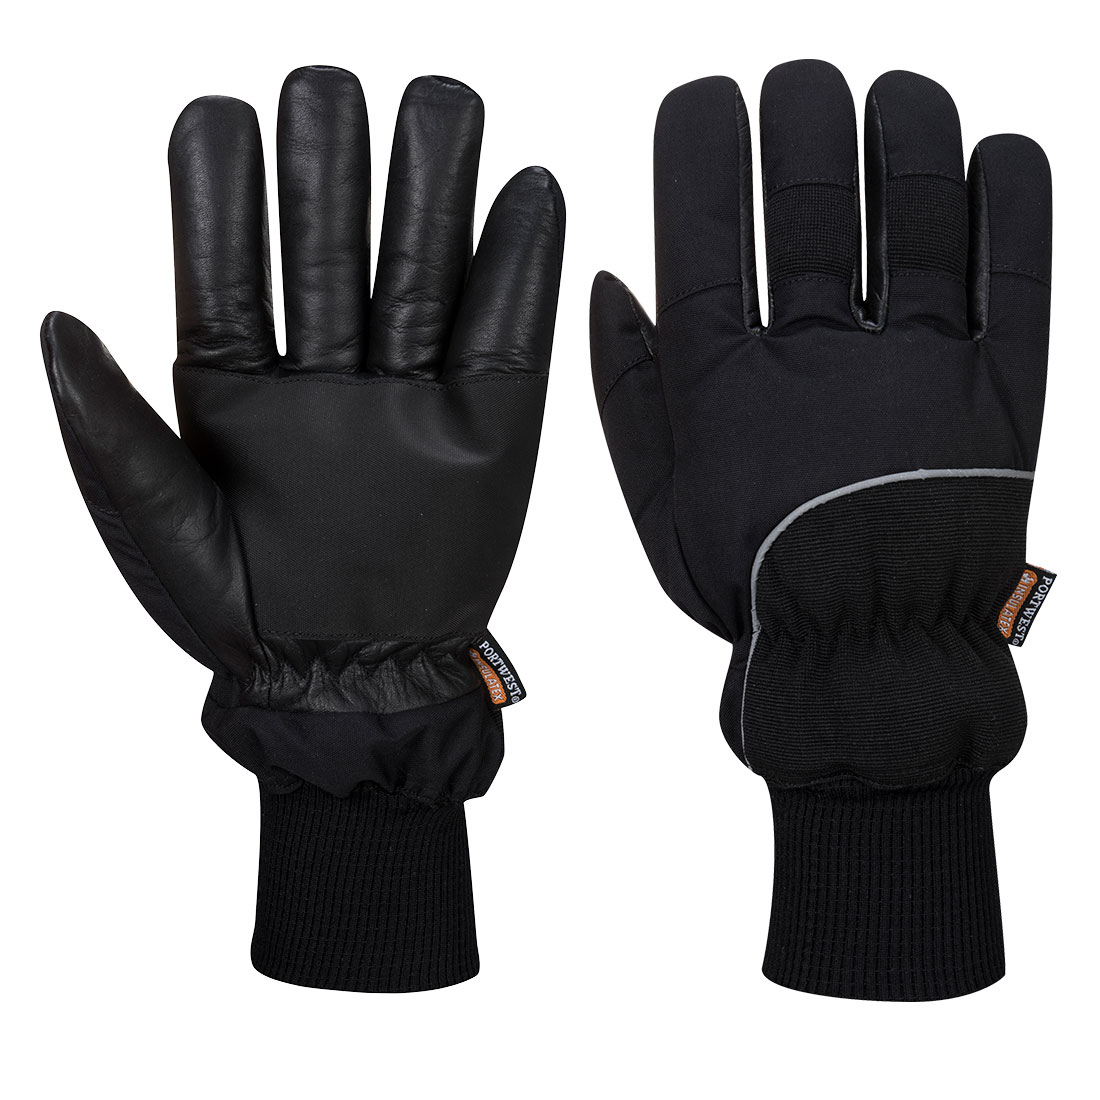 Apacha Cold Store Glove - Black